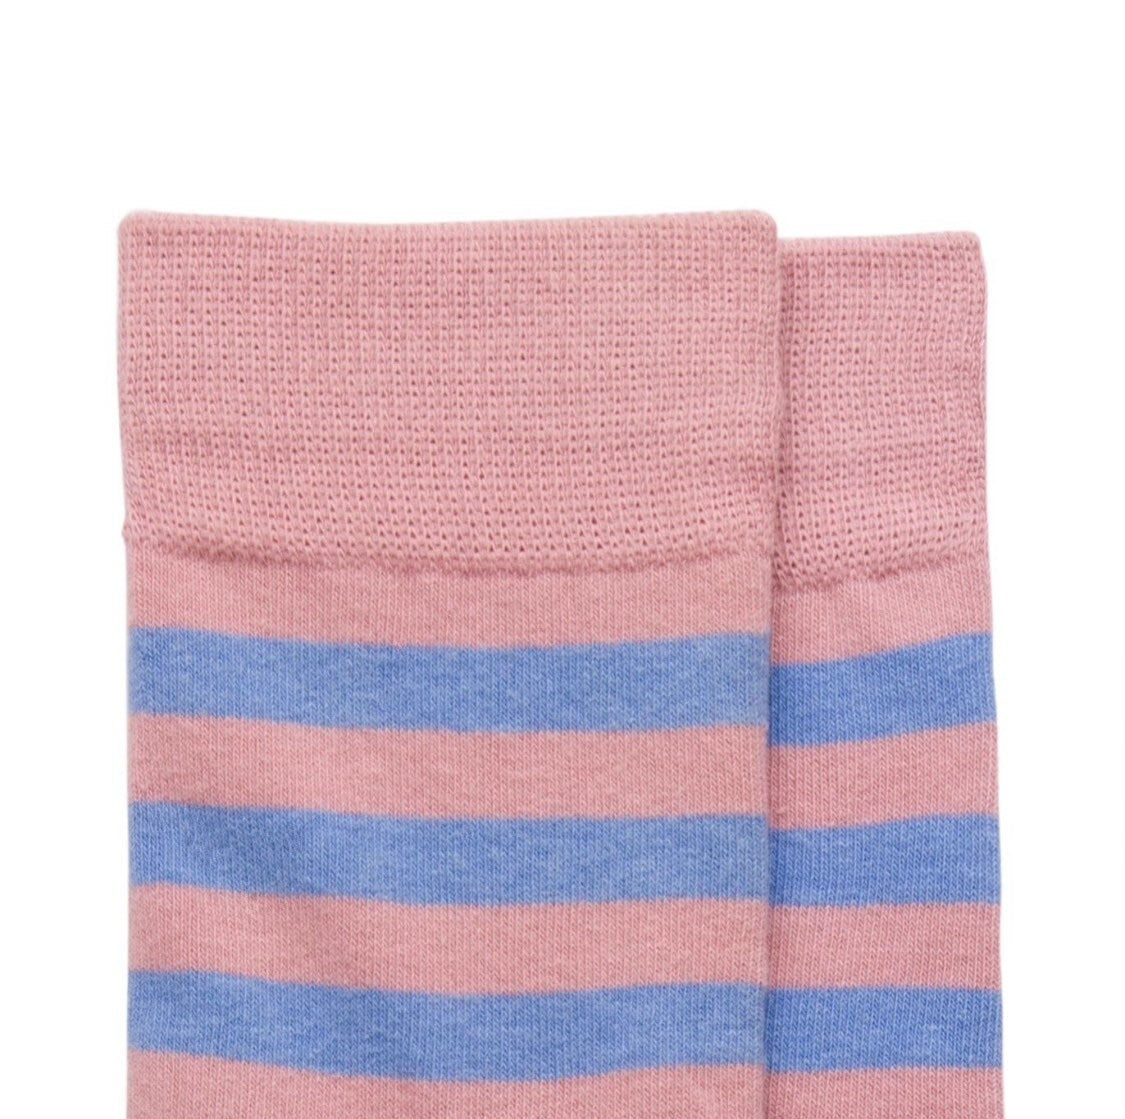 Miss June’s｜1 Pair designer cotton socks| Creative| Colorful | Cool | Patterned | Geometric socks| Unisex socks | Casual |